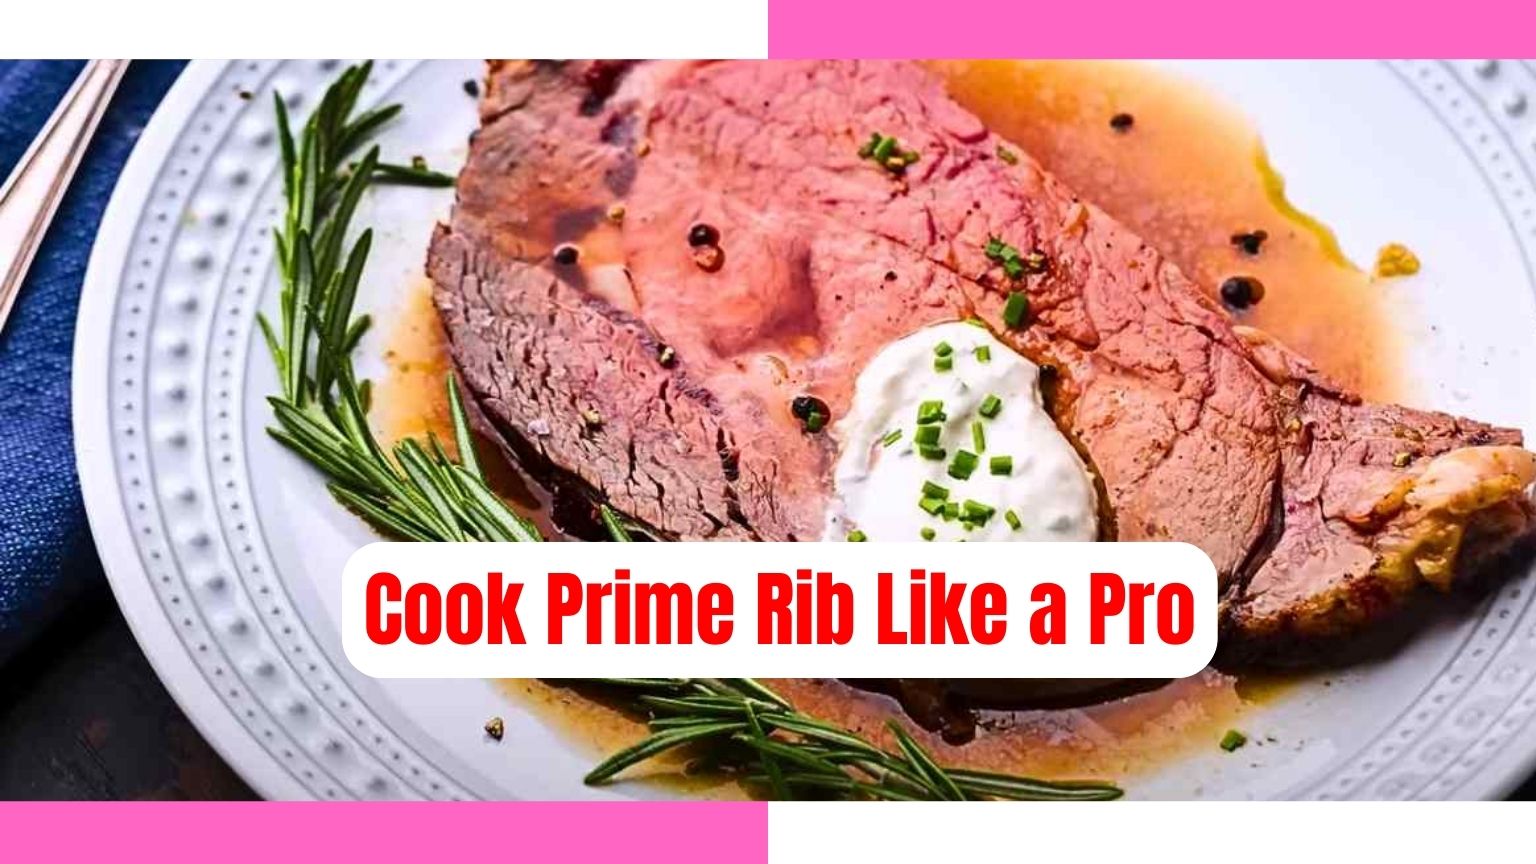 Cook Prime Rib Like a Pro, Cook Prime Rib, how to cook a prime rib accorkint to pat la frieda, pat lafrieda prime rib recipe, pat laffieda prime rib recipe, pat lafrieda prime rib cooking time, how to cook prime rib like a pro according to pat lafrieda,prime rib, prime rib recipe, prime rib recipes, prime rib roast recipe, prime rib roast,